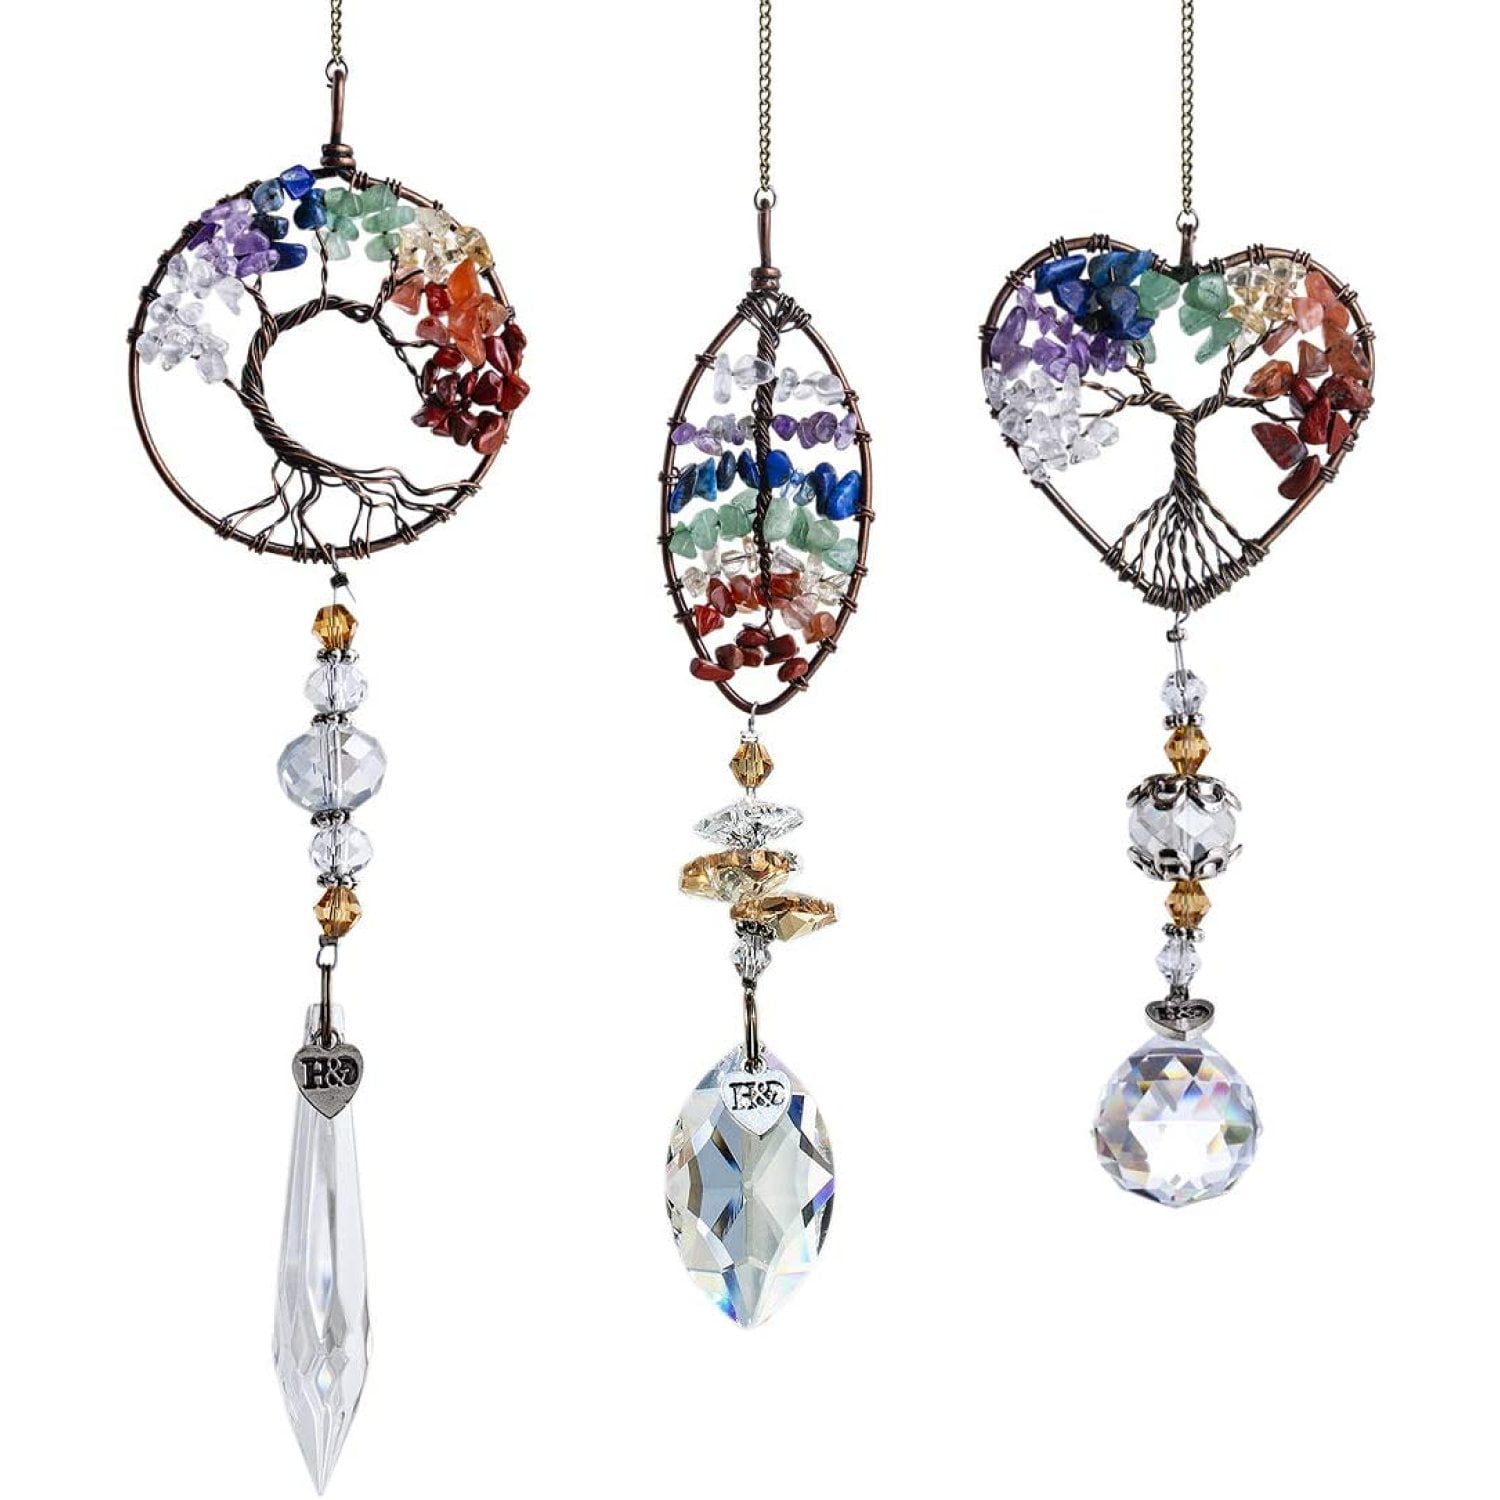 Crystal Glass Chakra Beads Prisms Suncatcher Pendant Ornament Wedding Decor Gift 